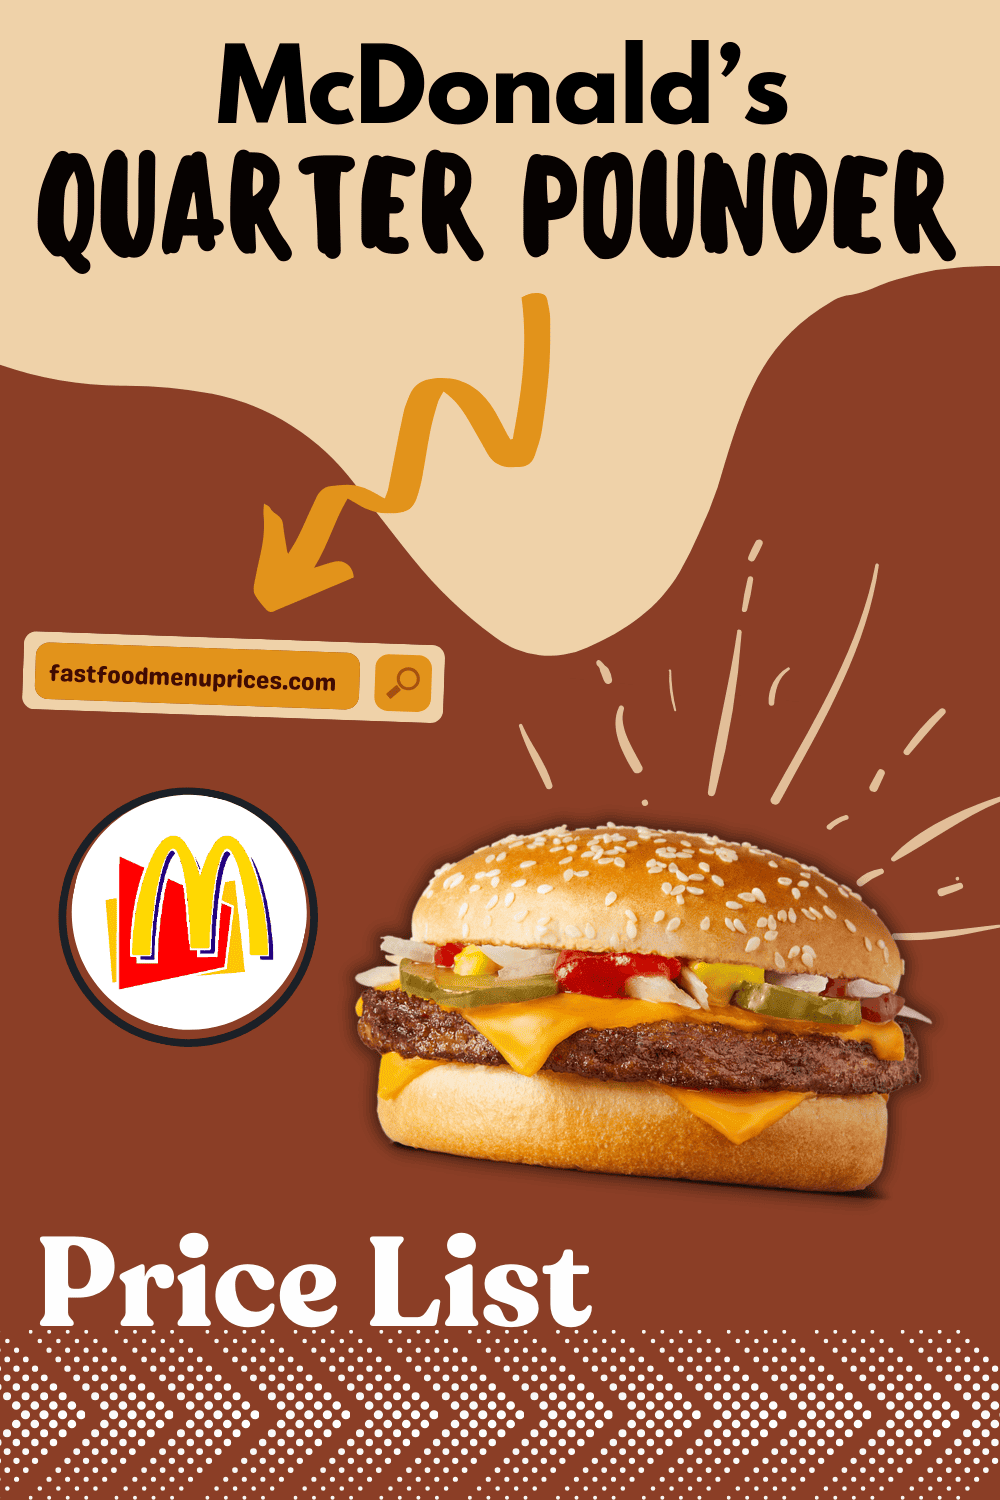 McDonald's quarter pounder price list and secret menu options.